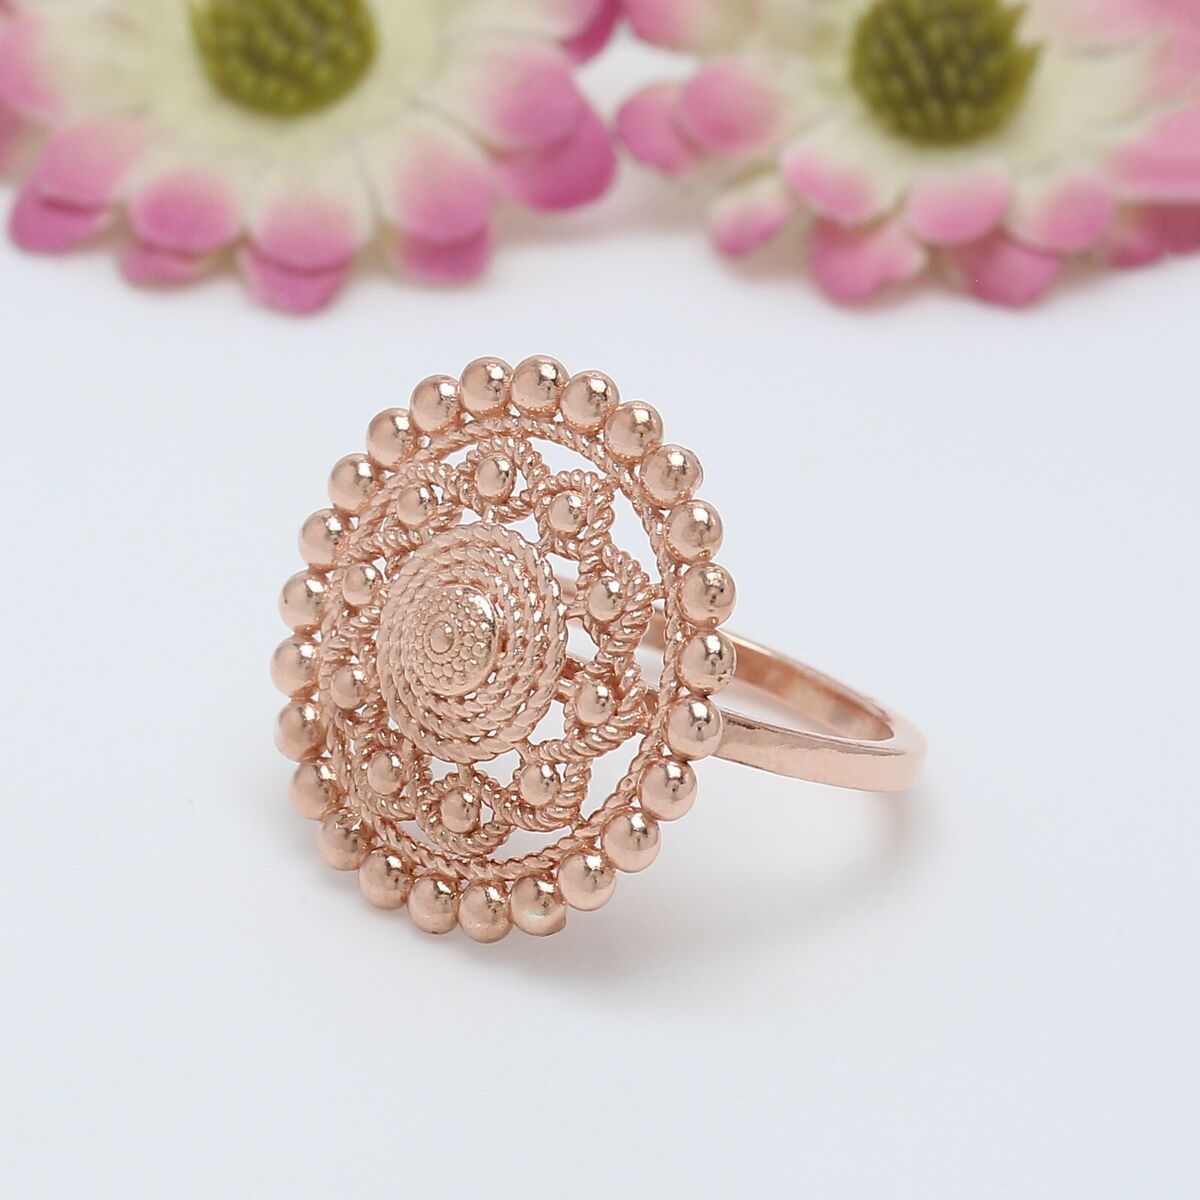 umbrella ring design idea | Latest gold ring designs, Ladies gold rings,  Fashion rings silver